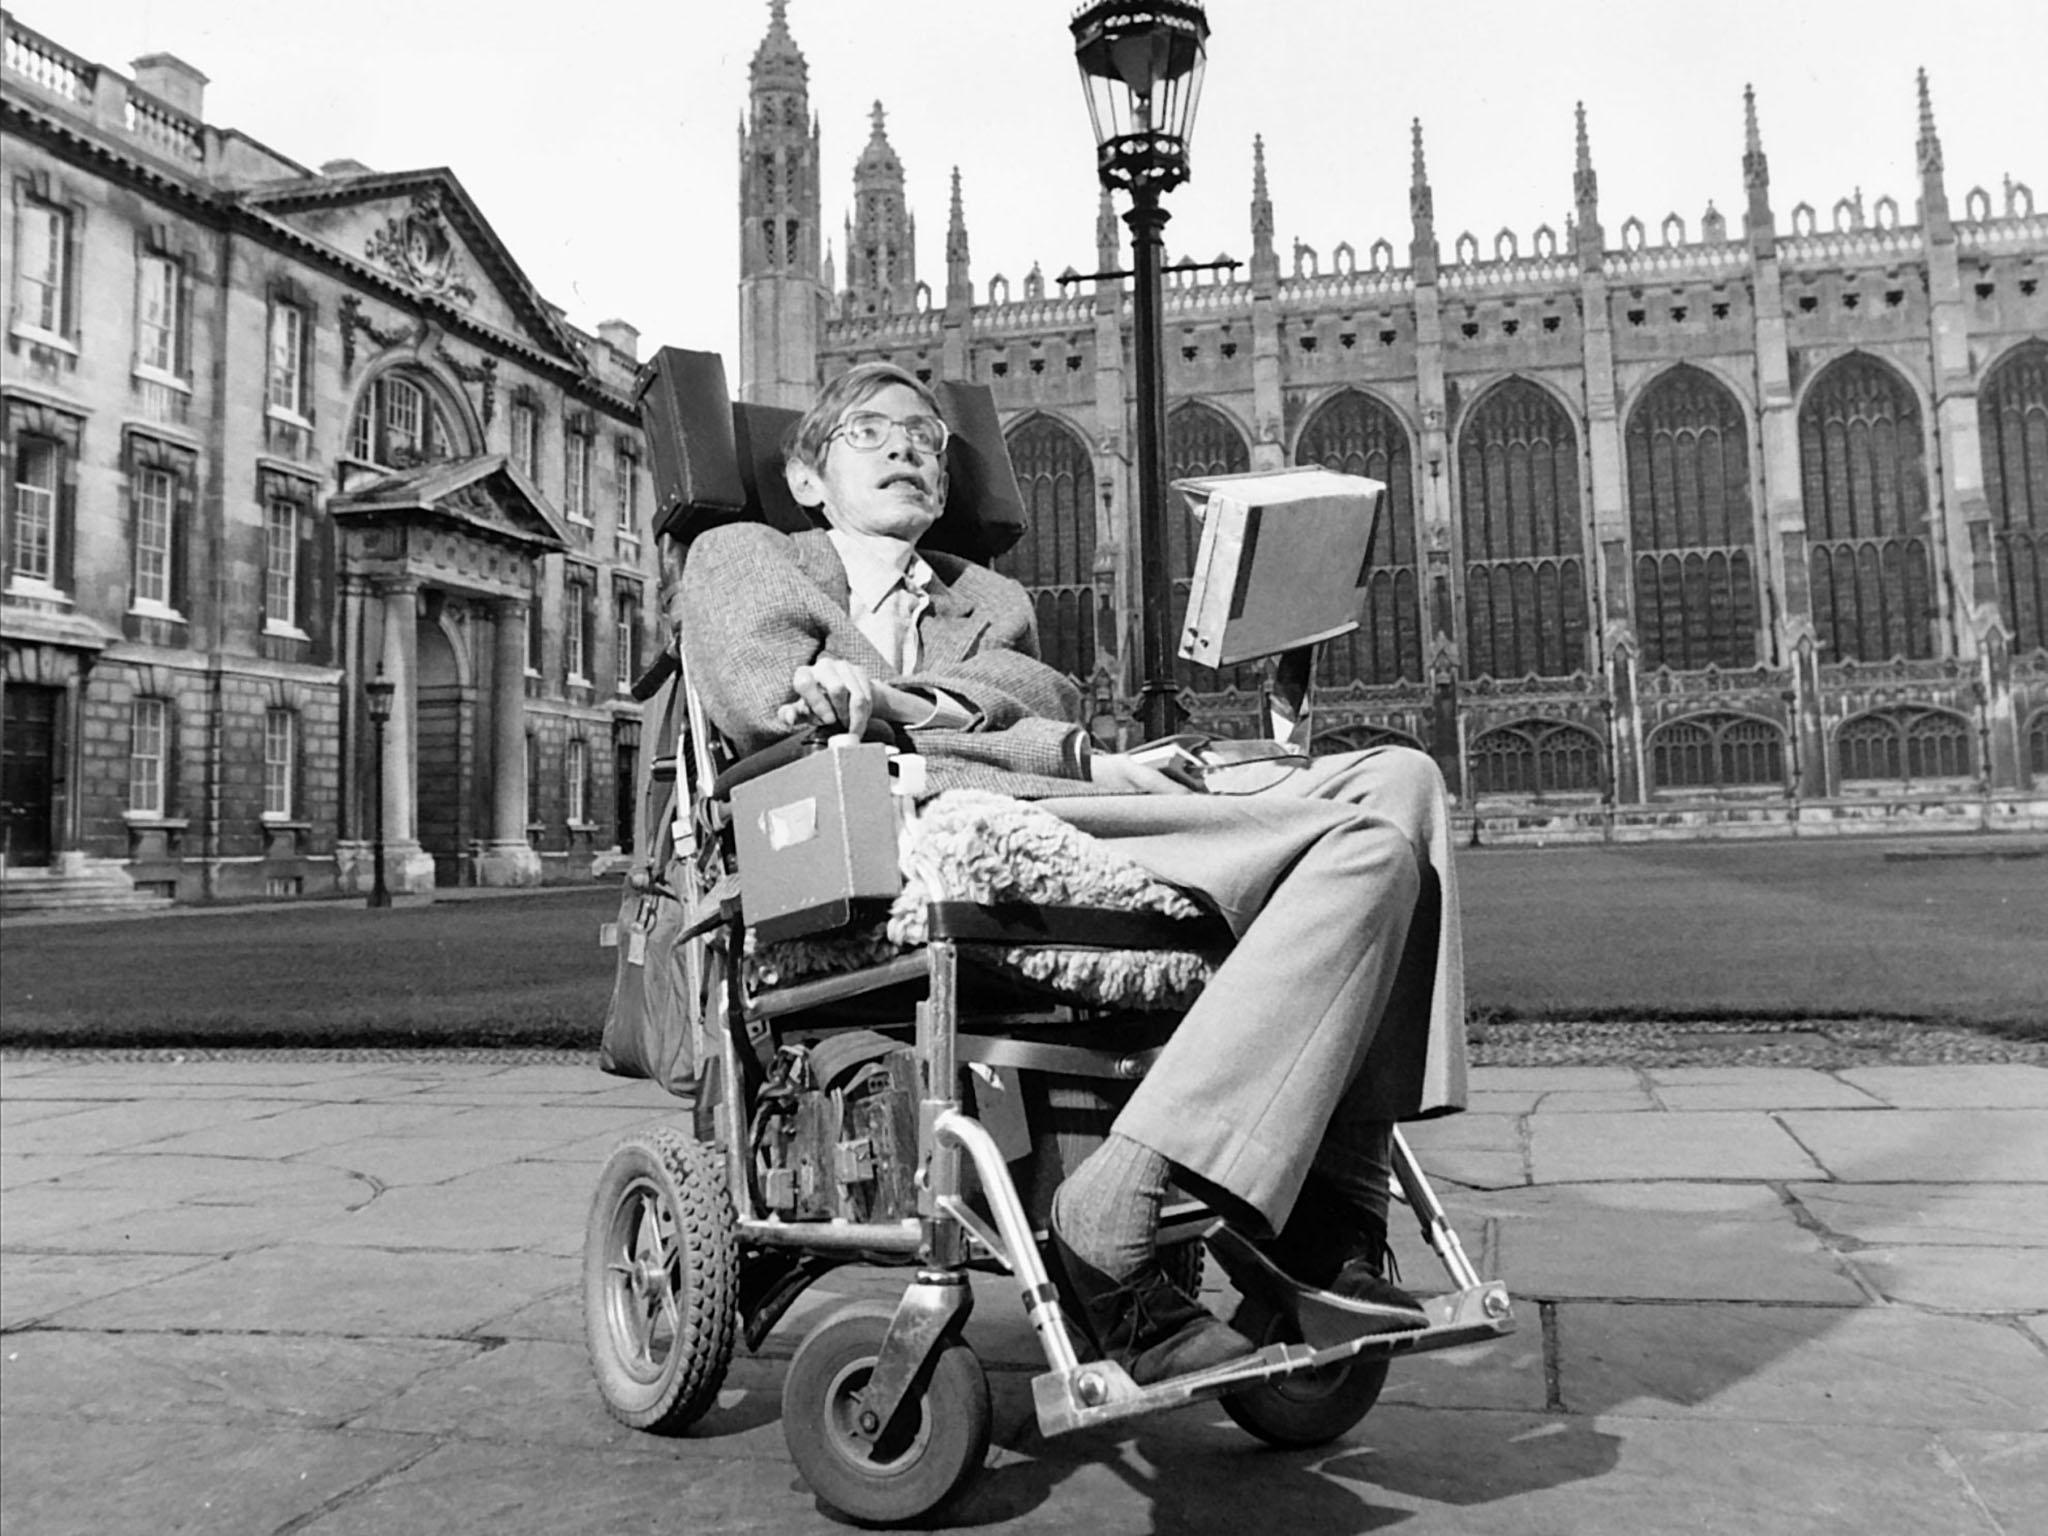 Hawking at the University of Cambridge